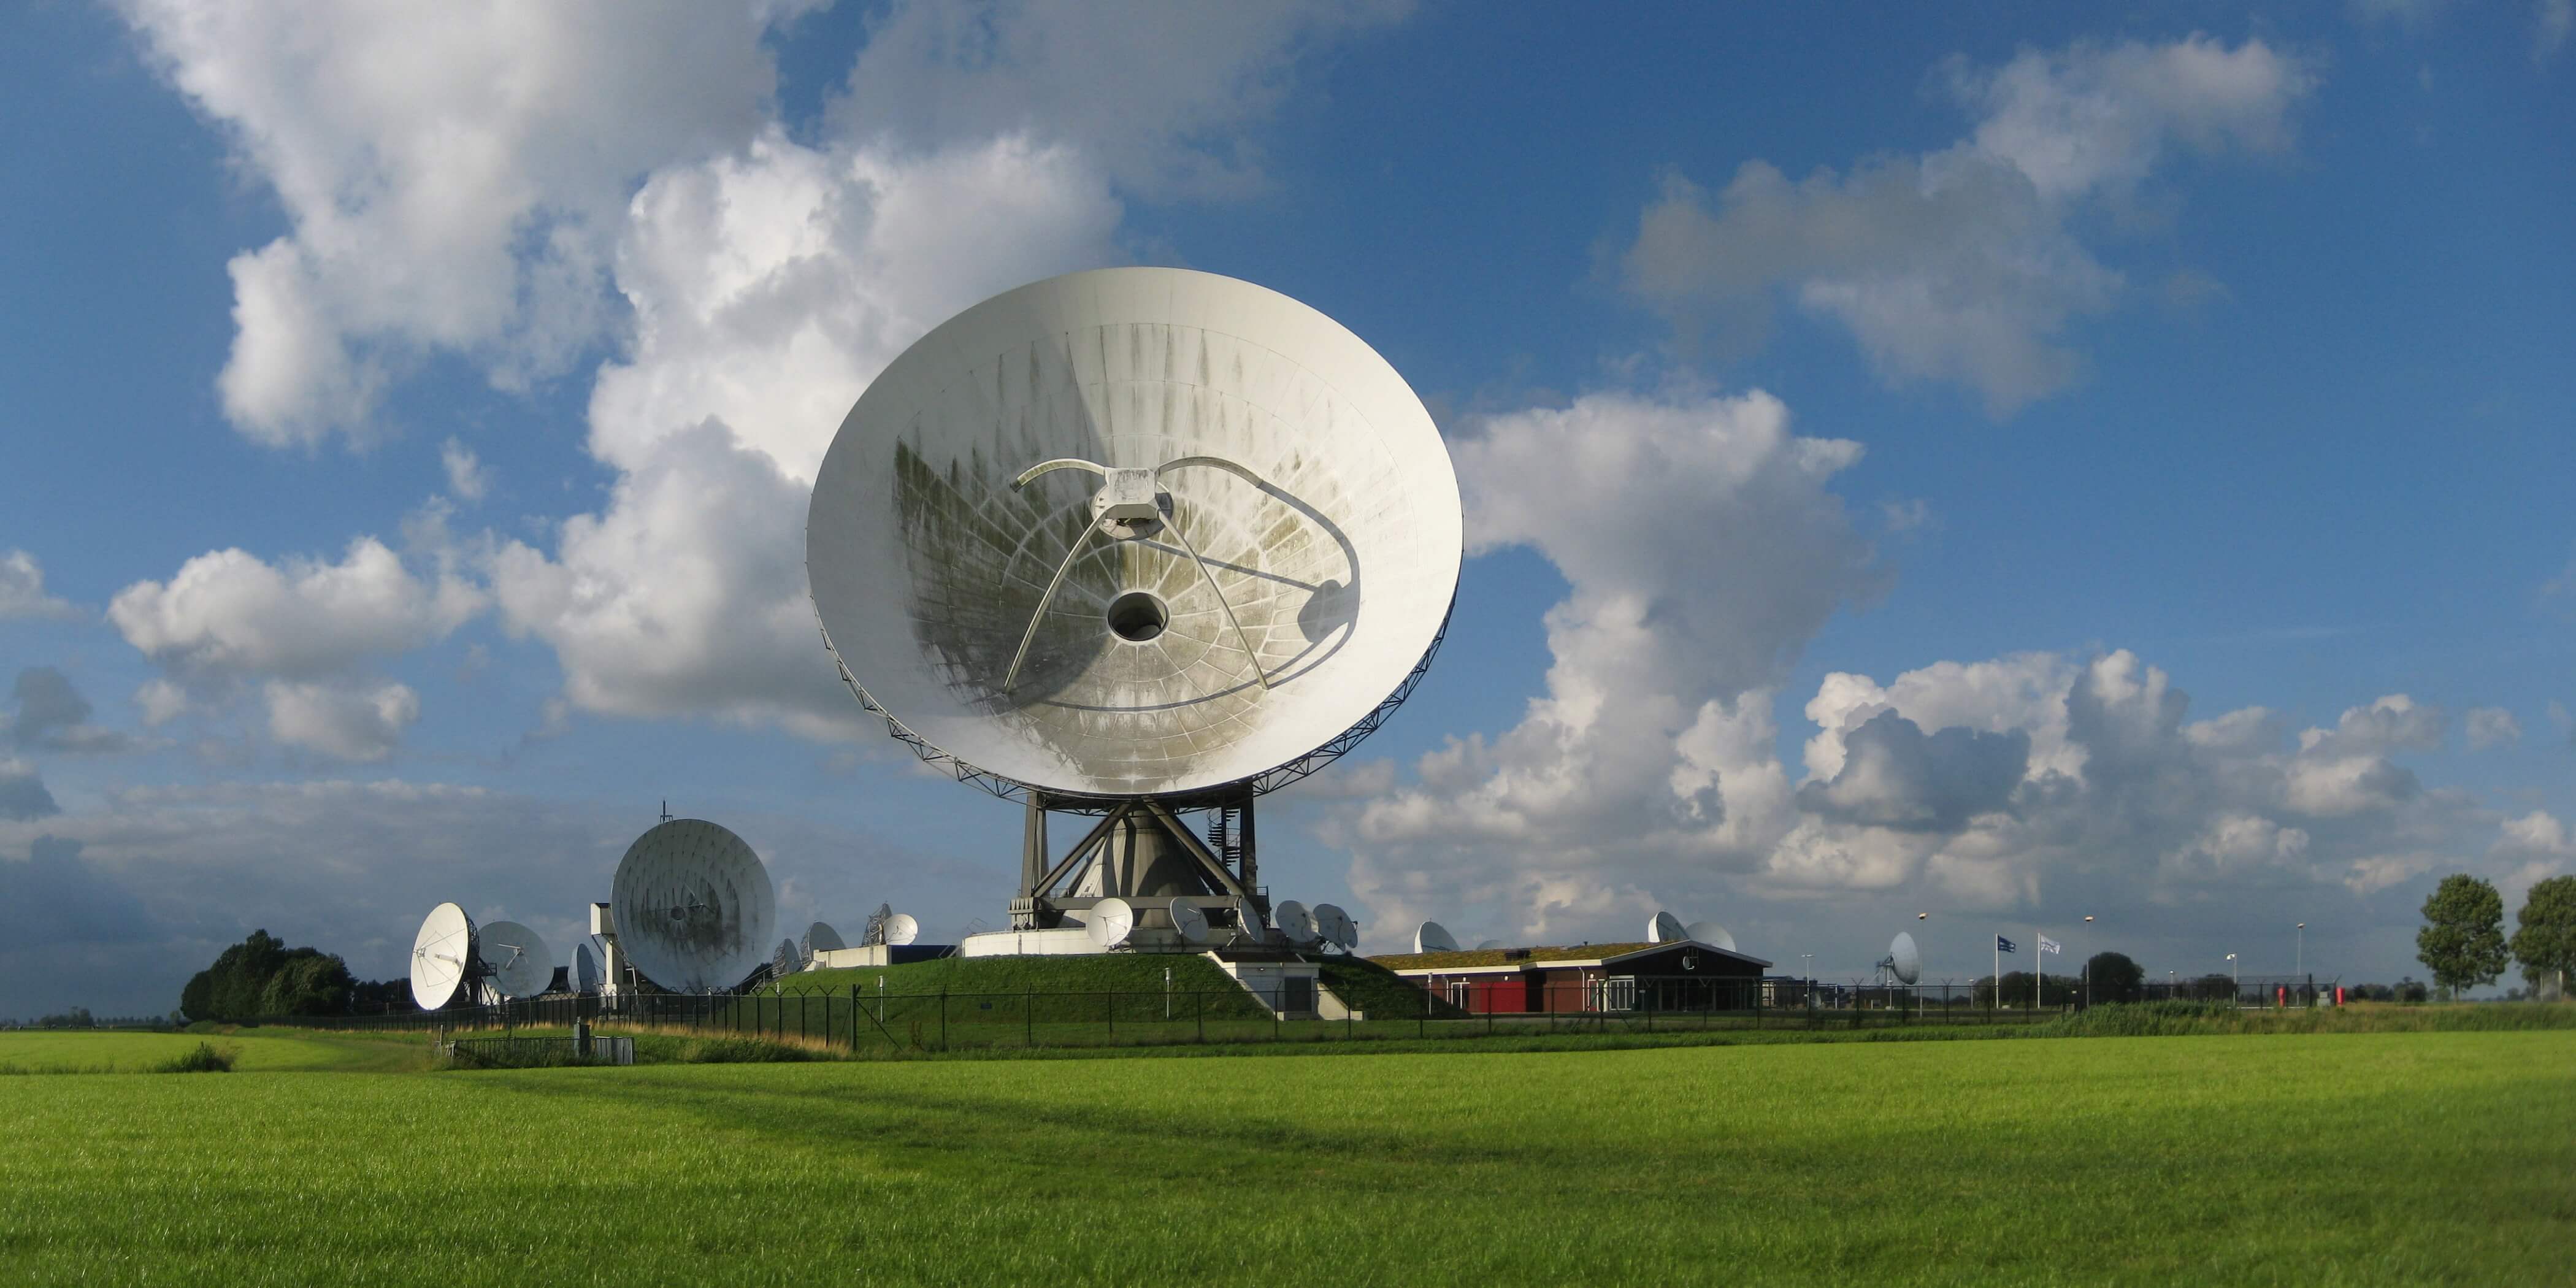 Satellietgrondstation van de Nationale SIGINT Organisatie (NSO) bij Burum, Friesland in 2012. © Wutsje / Wikimedia Commons / CC BY-SA 3.0